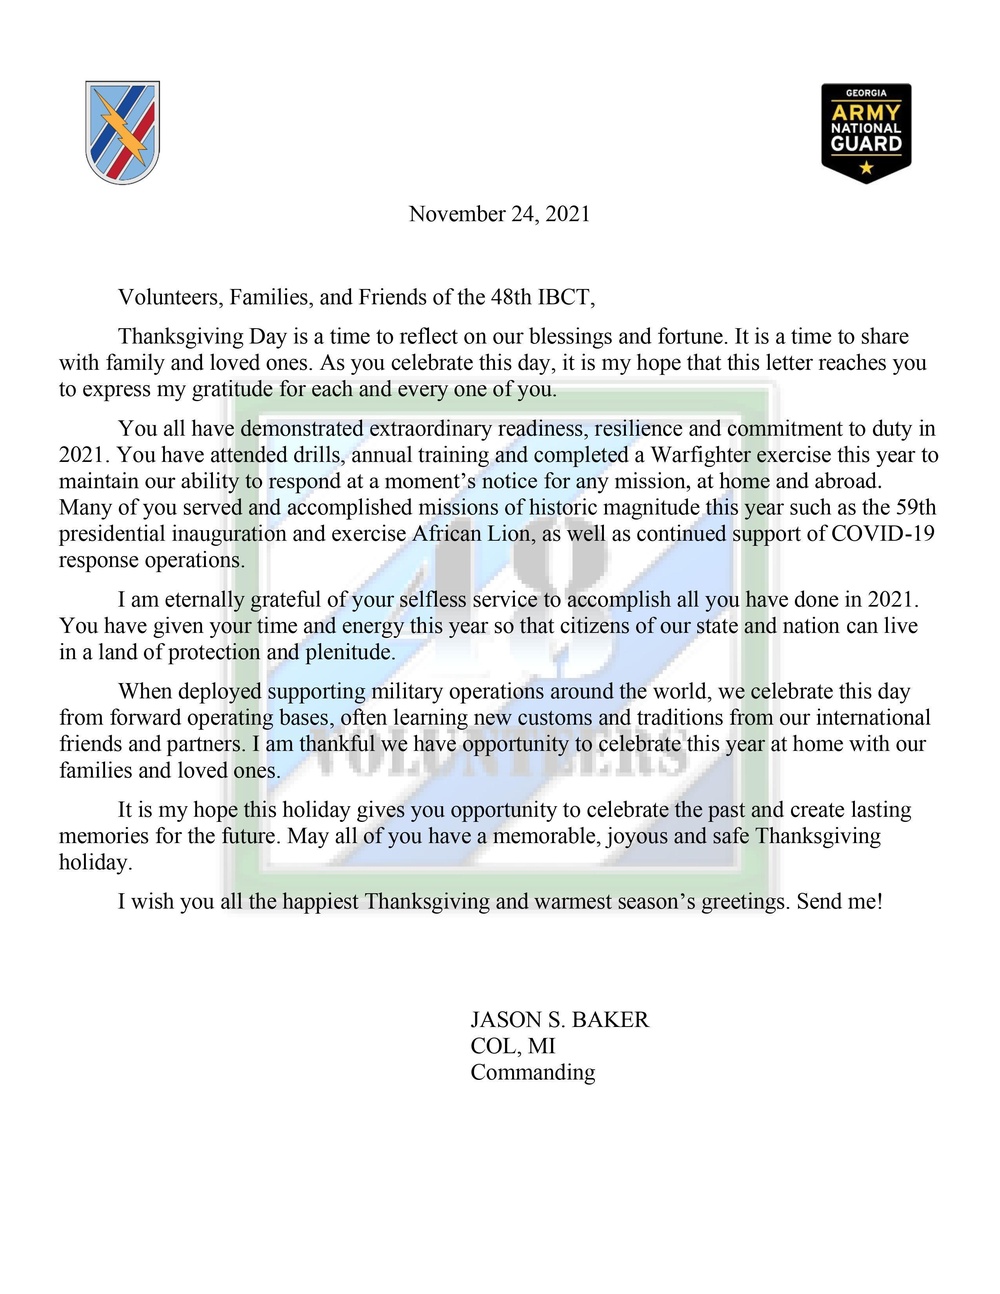 48th IBCT Commander Thanksgiving Letter